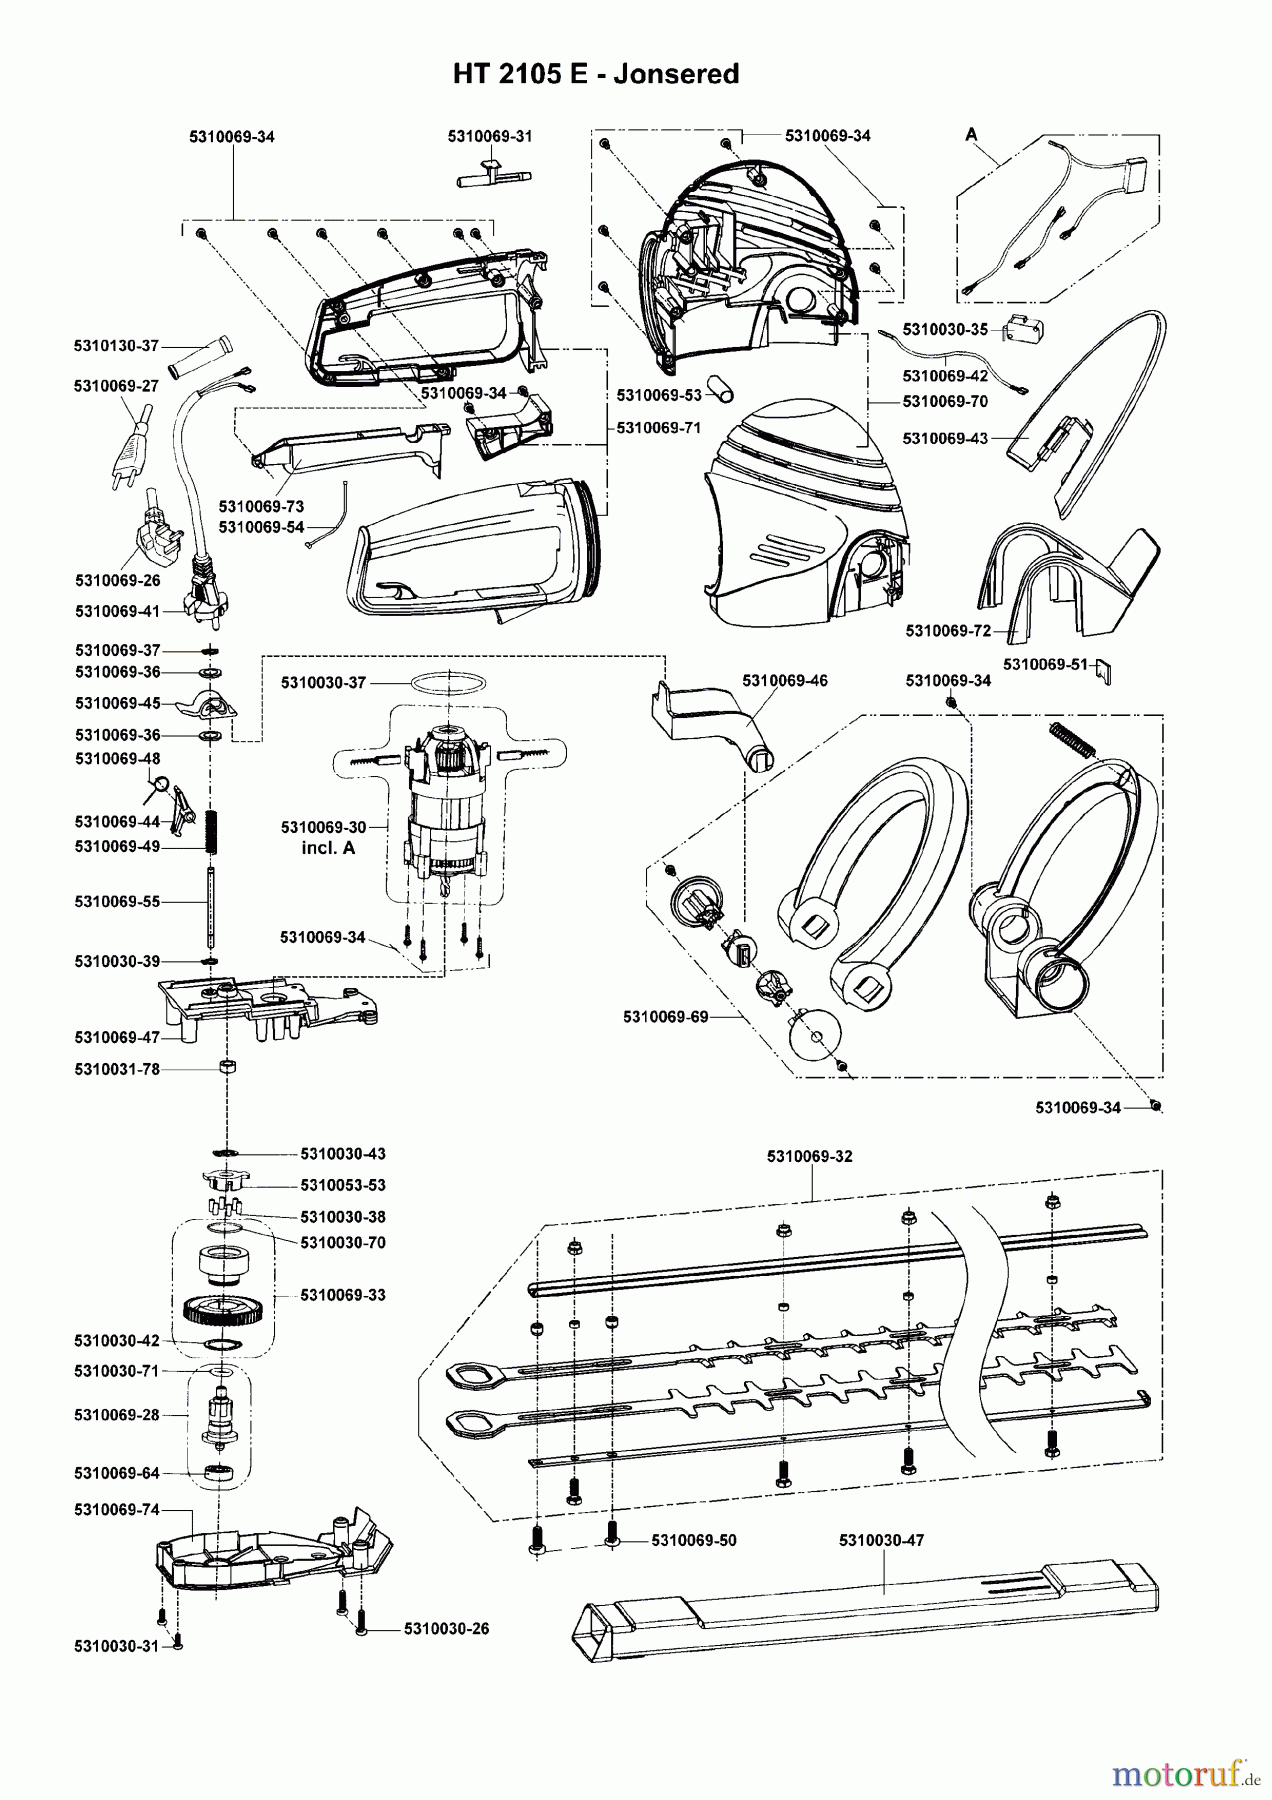  Jonsered Rasenmäher 450RHT2105E - Jonsered Walk-Behind Mower (1995-01) PRODUCT COMPLETE